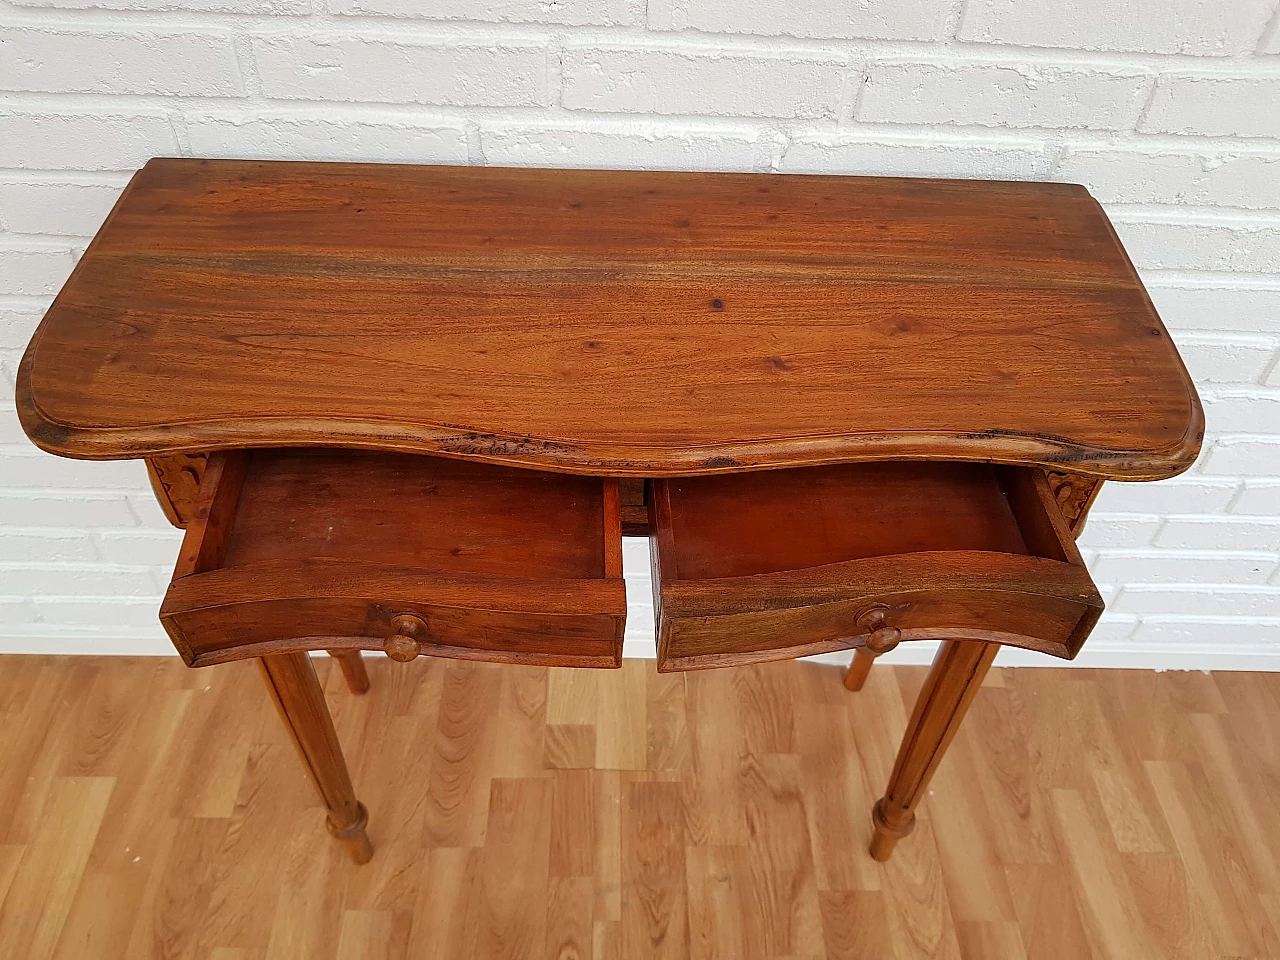 Side table, danish design, 50s, teak wood, drawers 1064973